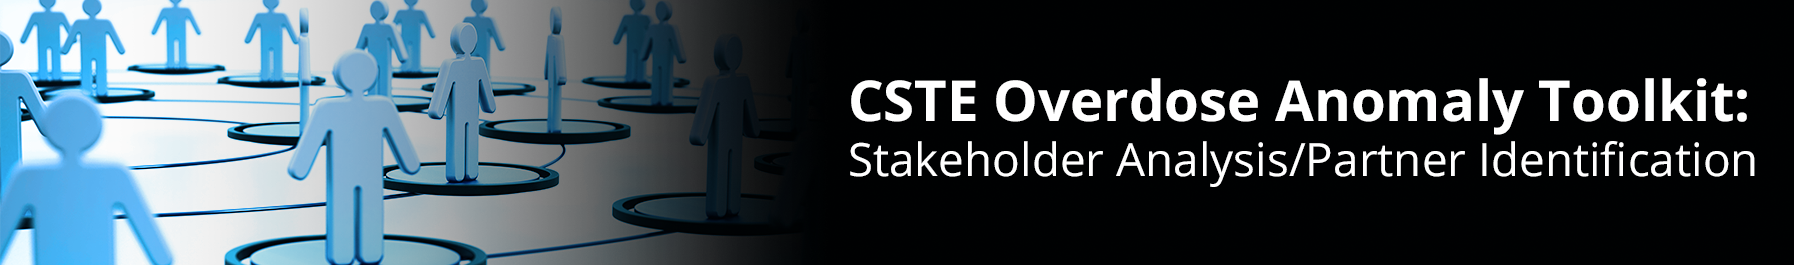 CSTE Overdose Anomaly Toolkit: Stakeholder Analysis/Partner Identification